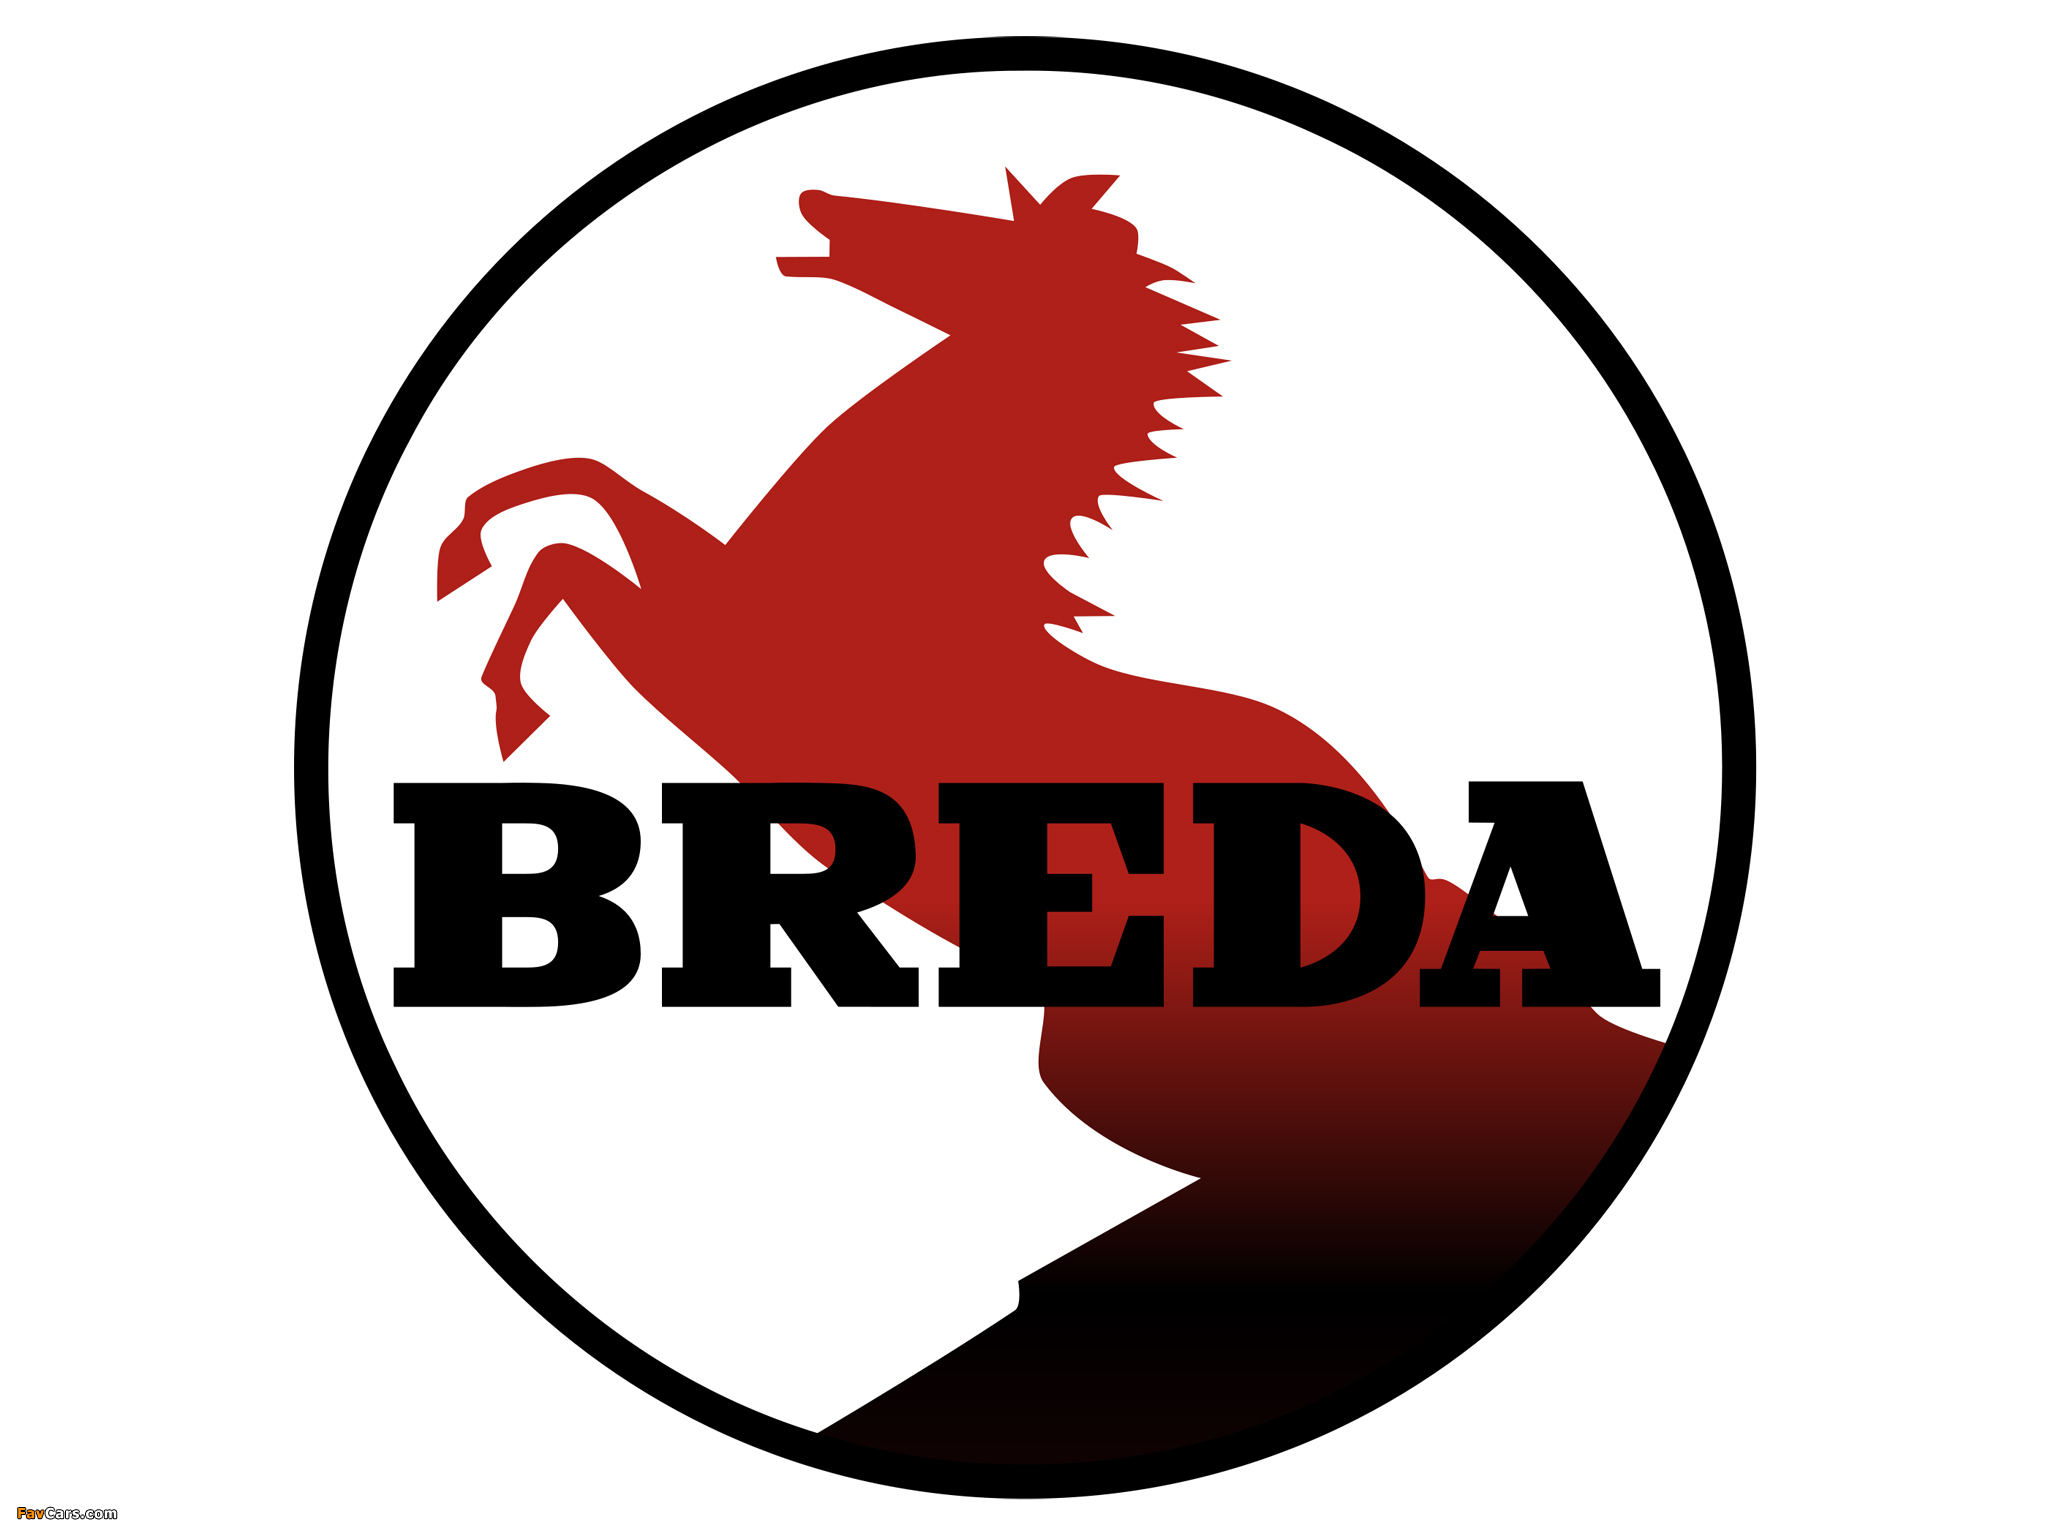 Breda images (2048 x 1536)